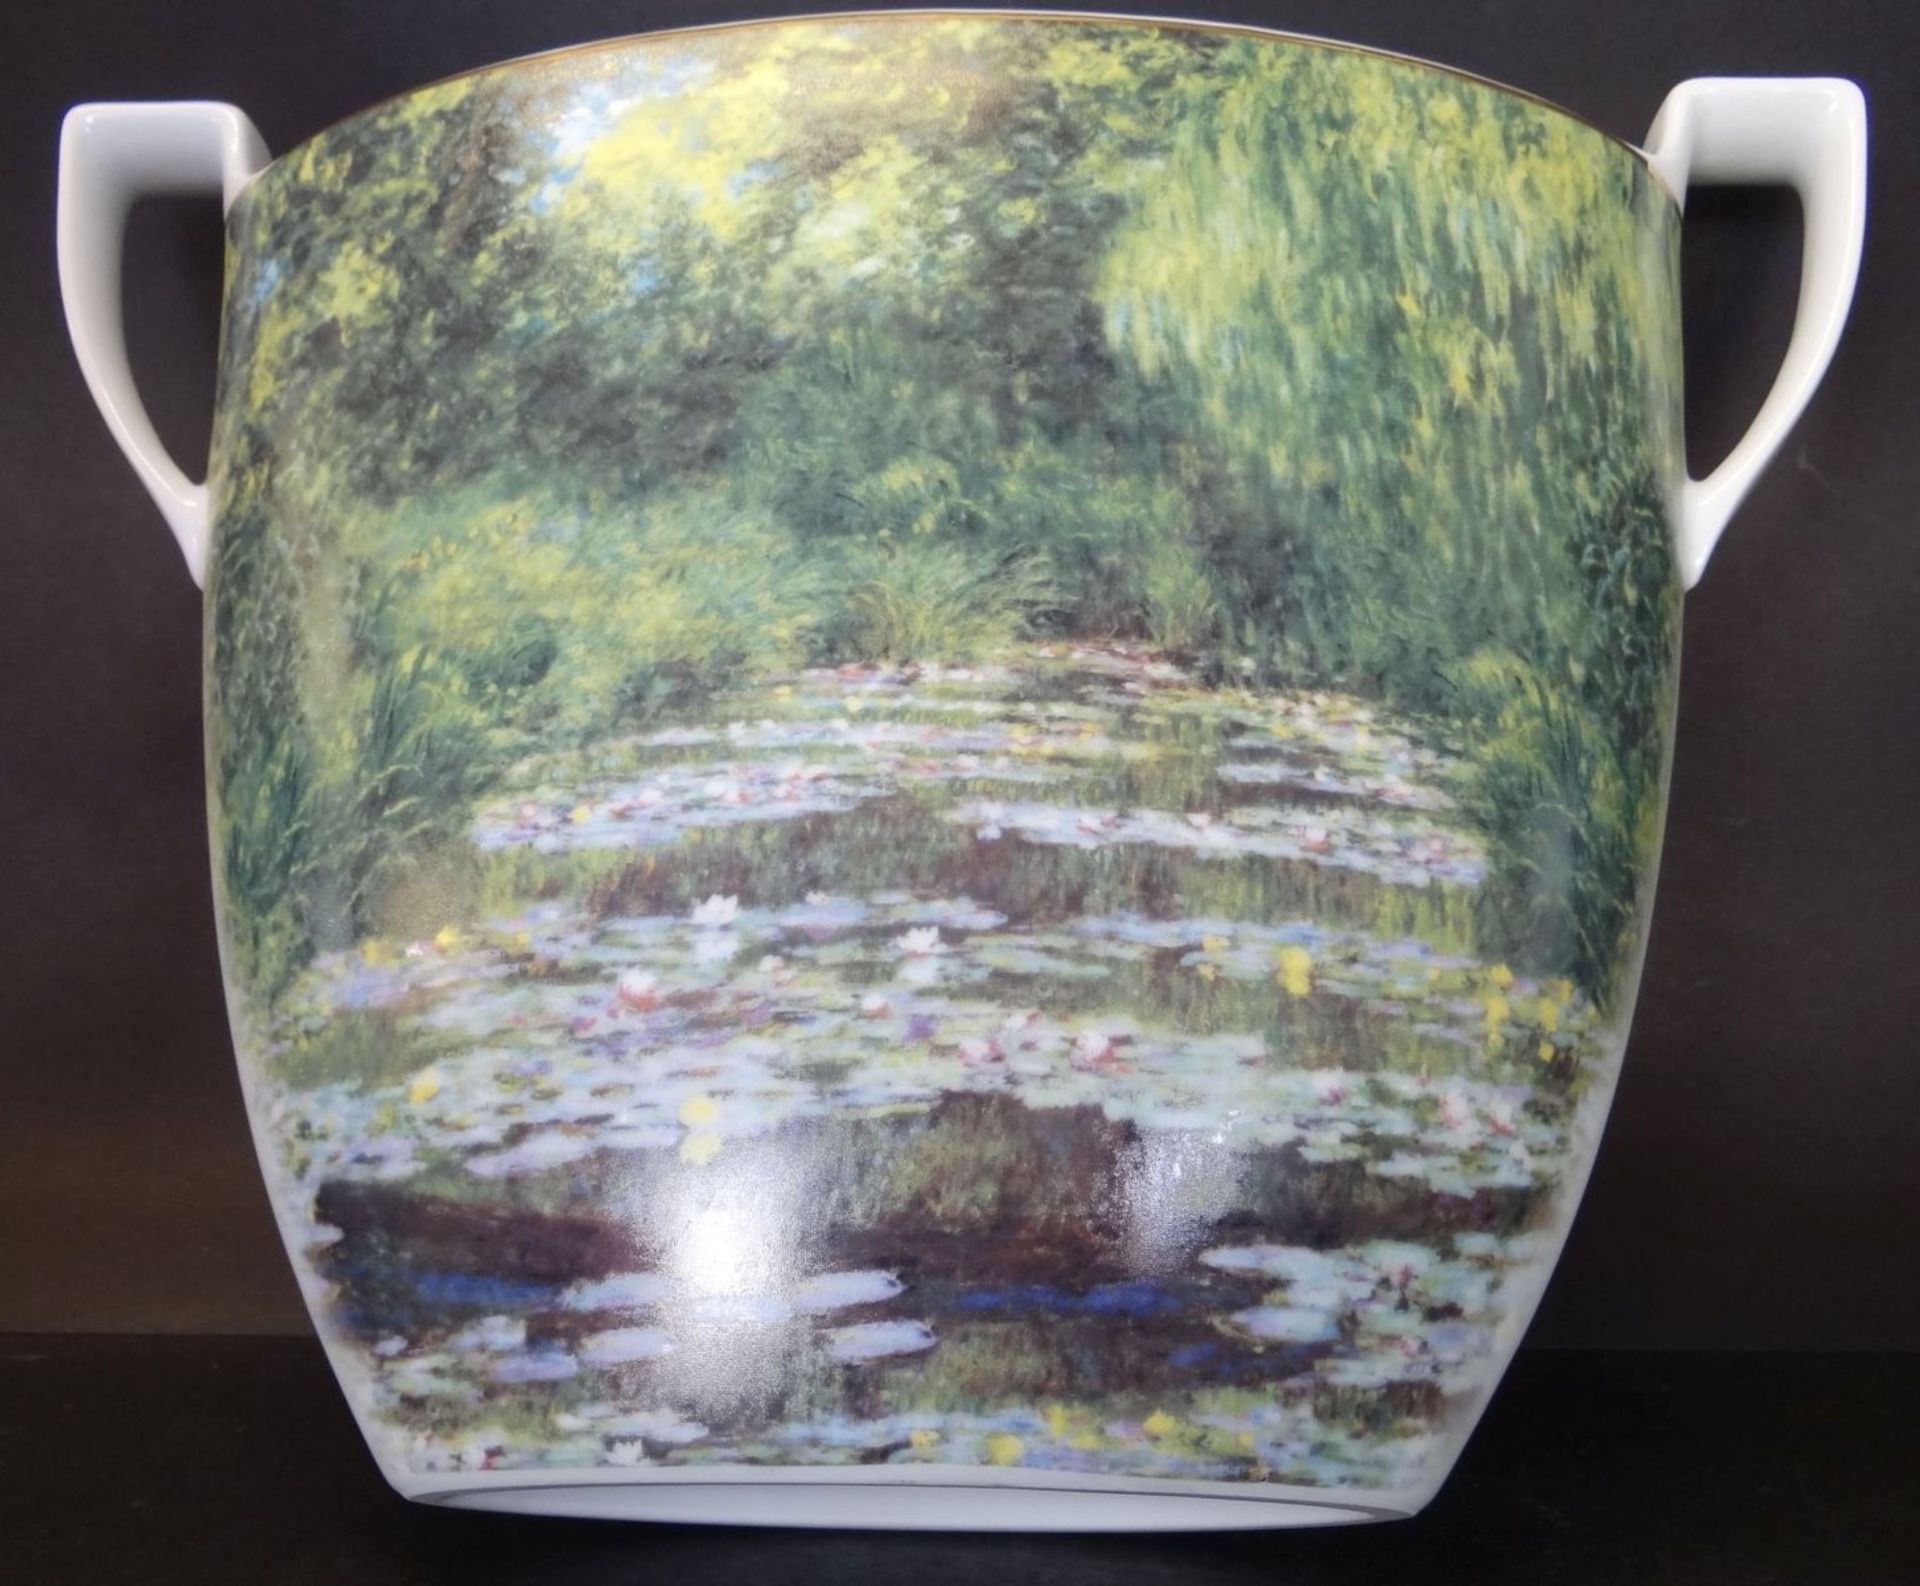 grosse ovoide Vase "Goebel" Artis Orbis, nach Monet, H-27 cm, B-37 cm - Image 3 of 6